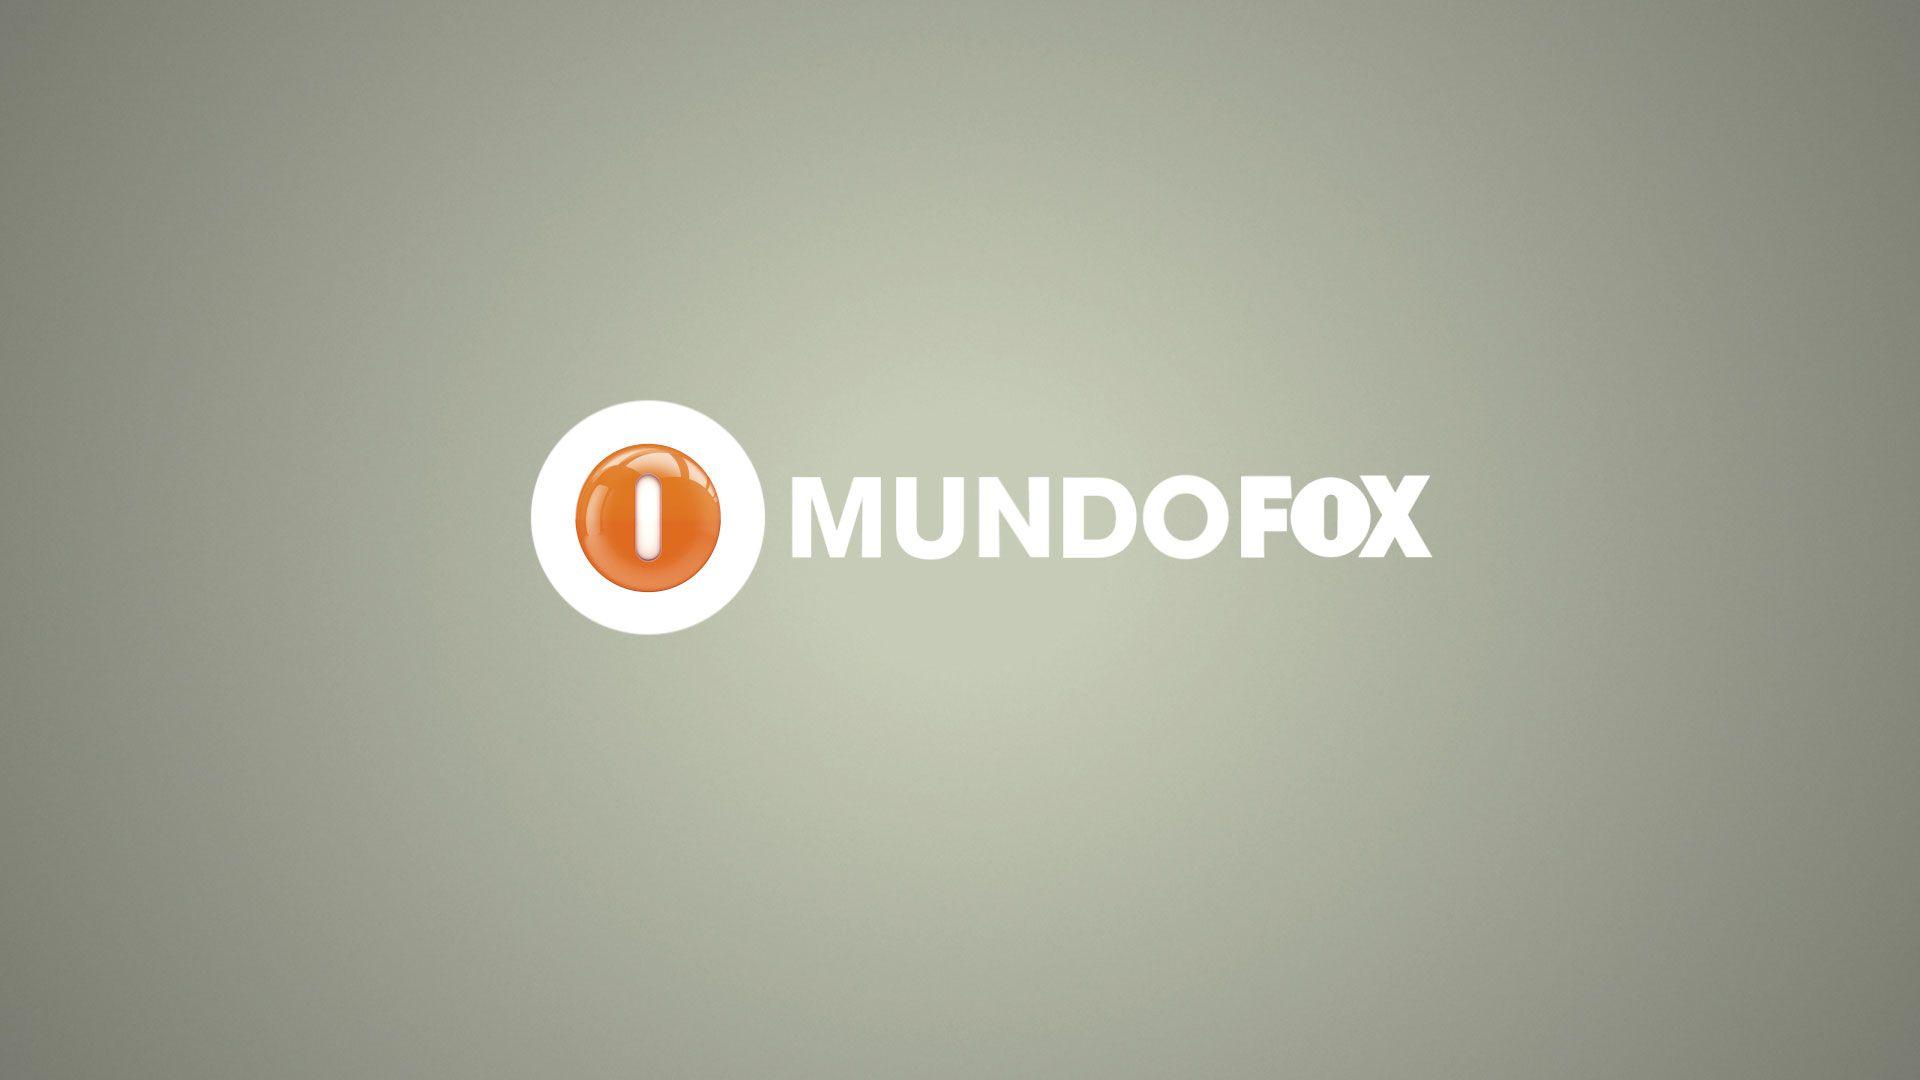 MundoFox Logo - MU Design | MUNDO FOX USA